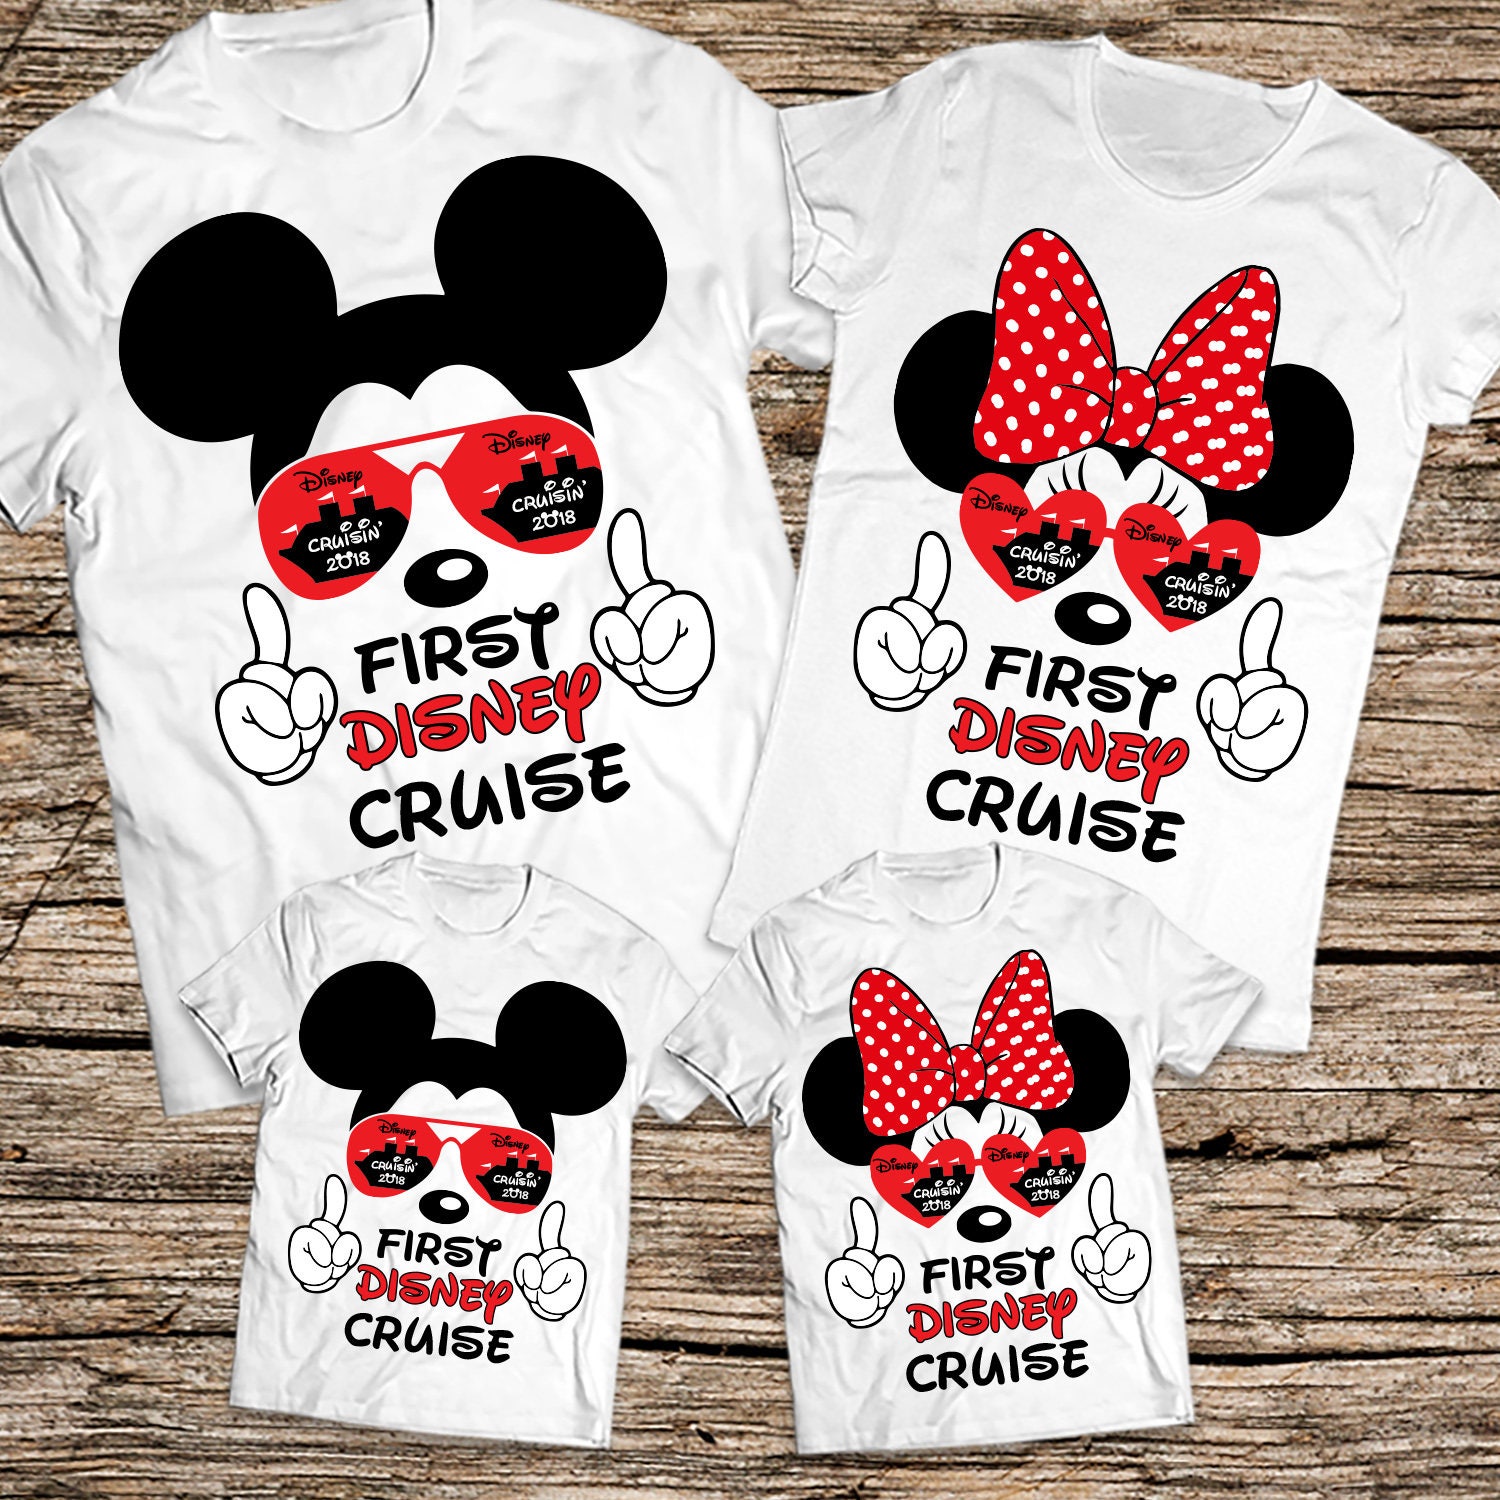 disney cruise shirts for family